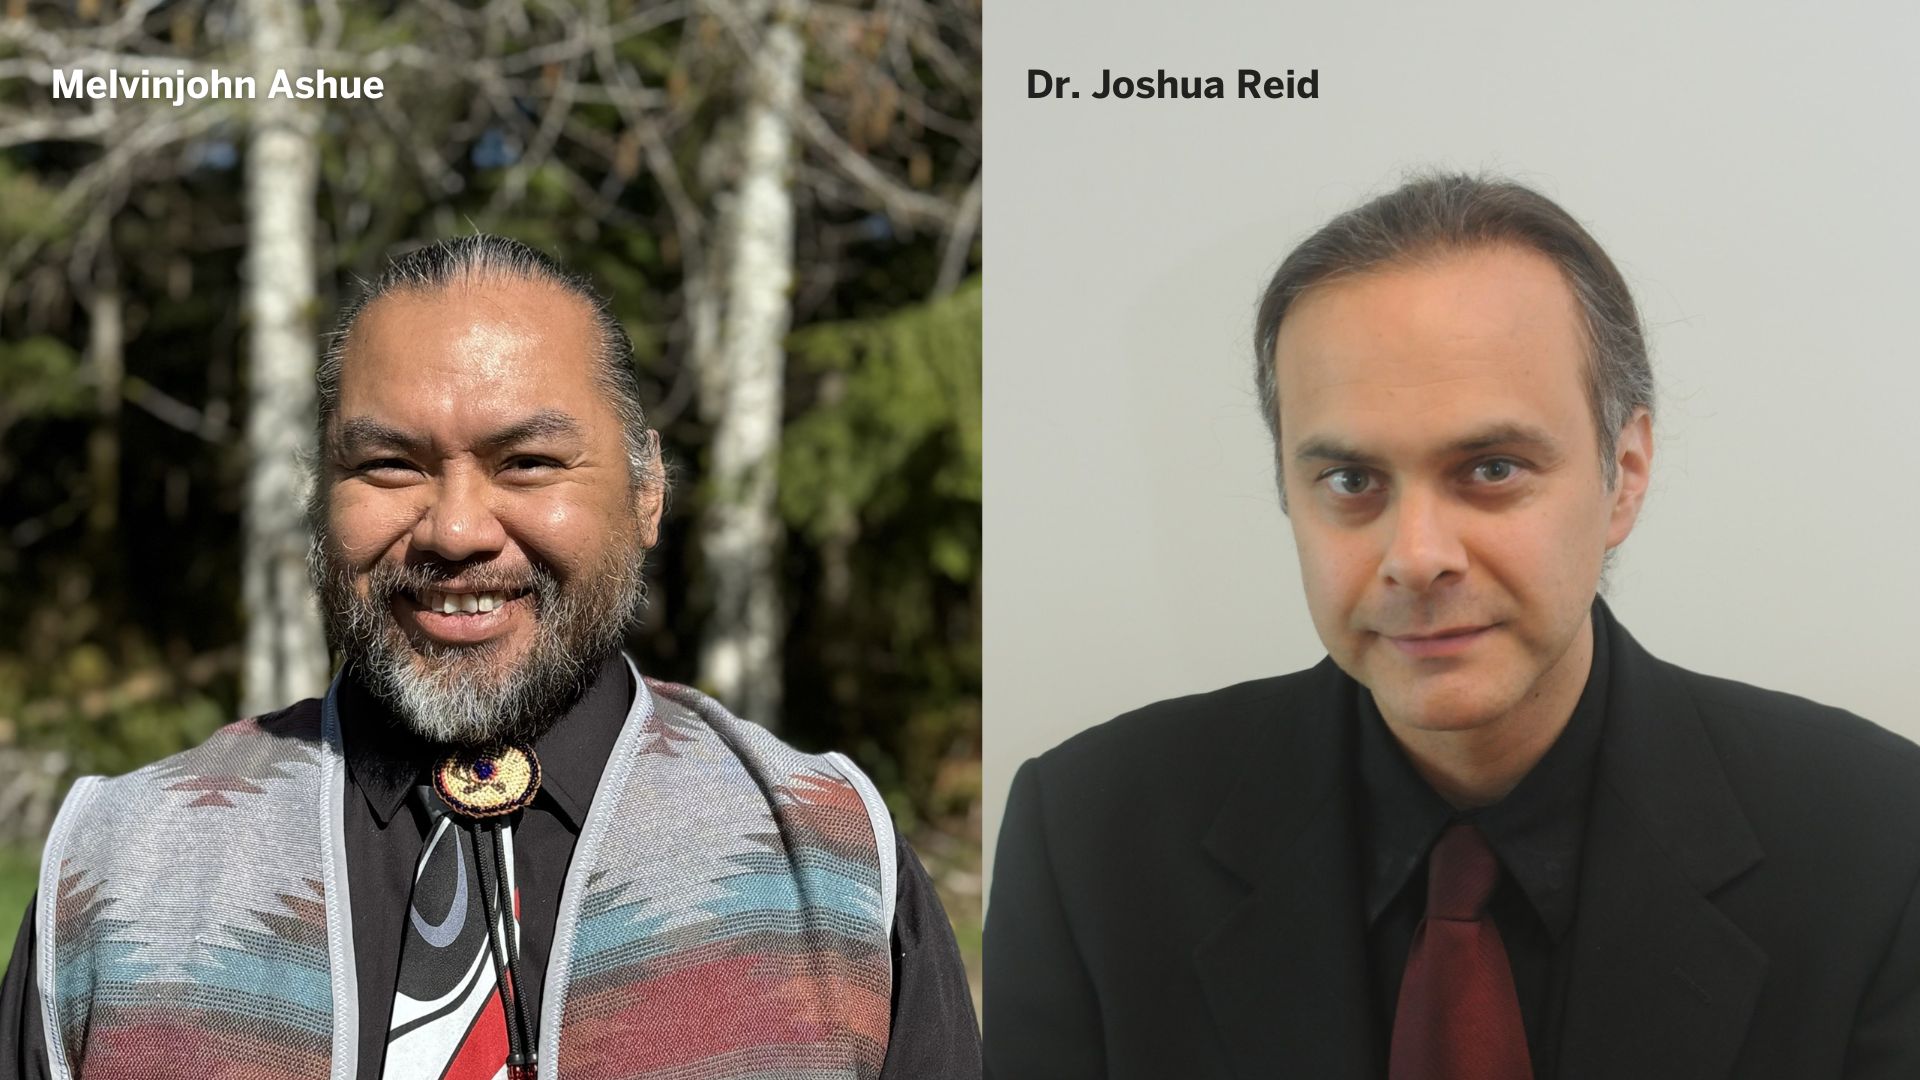 Dr. Joshua Reid and Melvinjohn Ashue